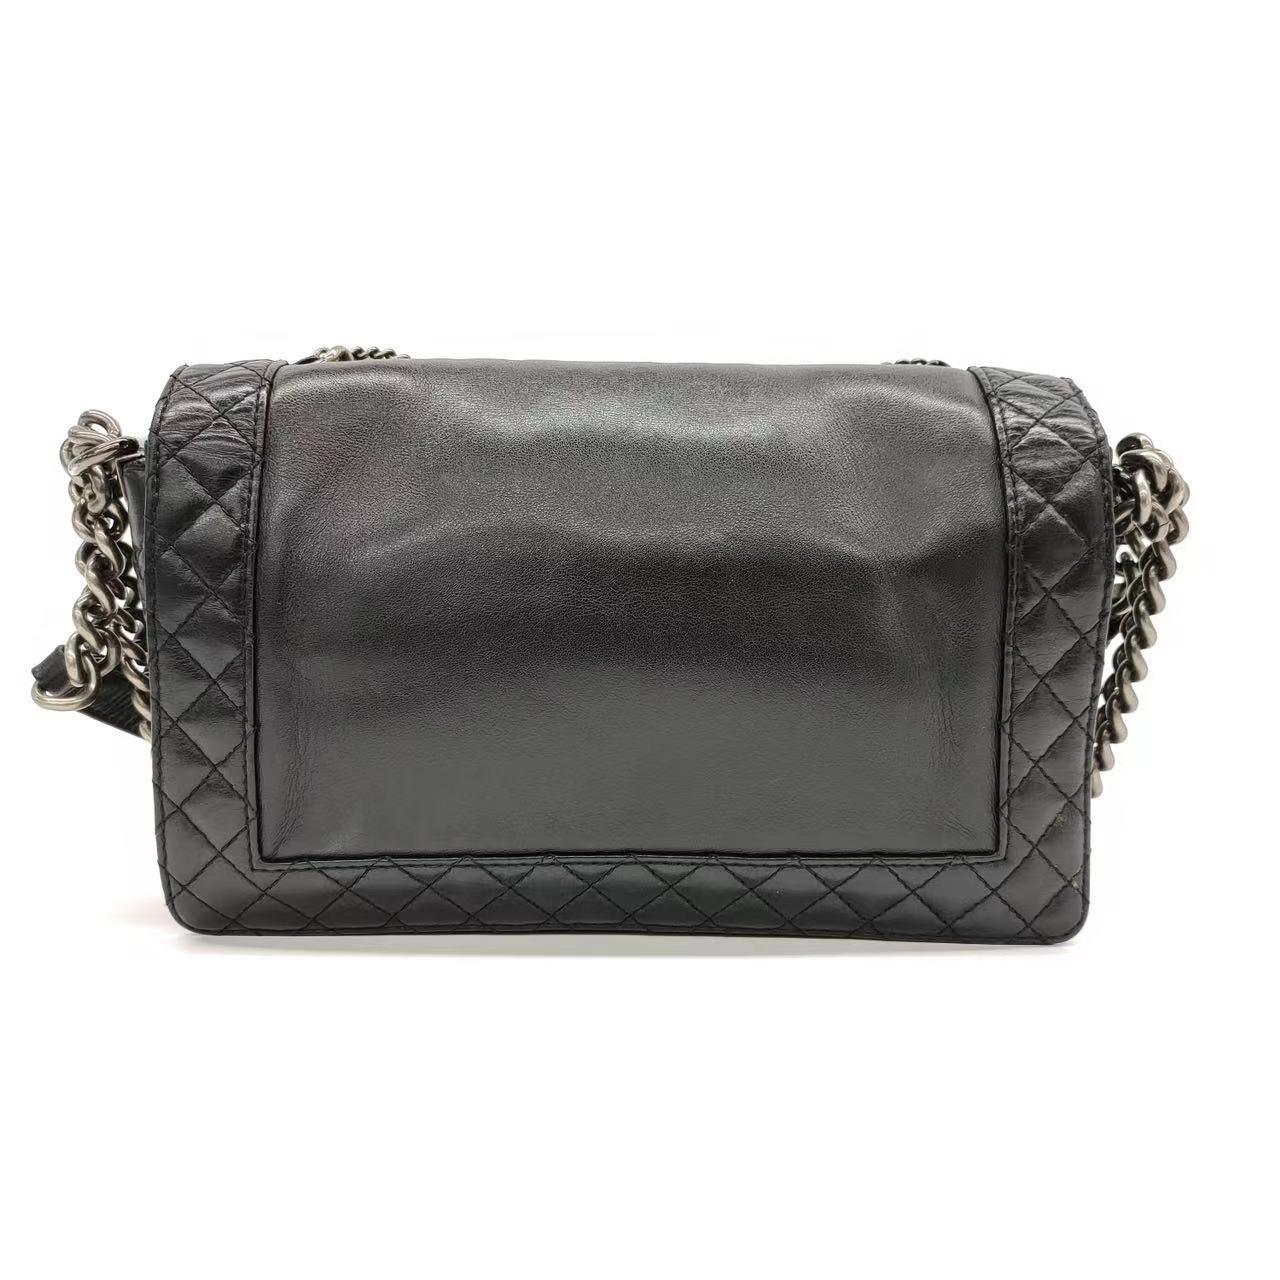 Chanel Enchained Boy Bag 2012 Black Leather Medium Flap Bag For Sale 1